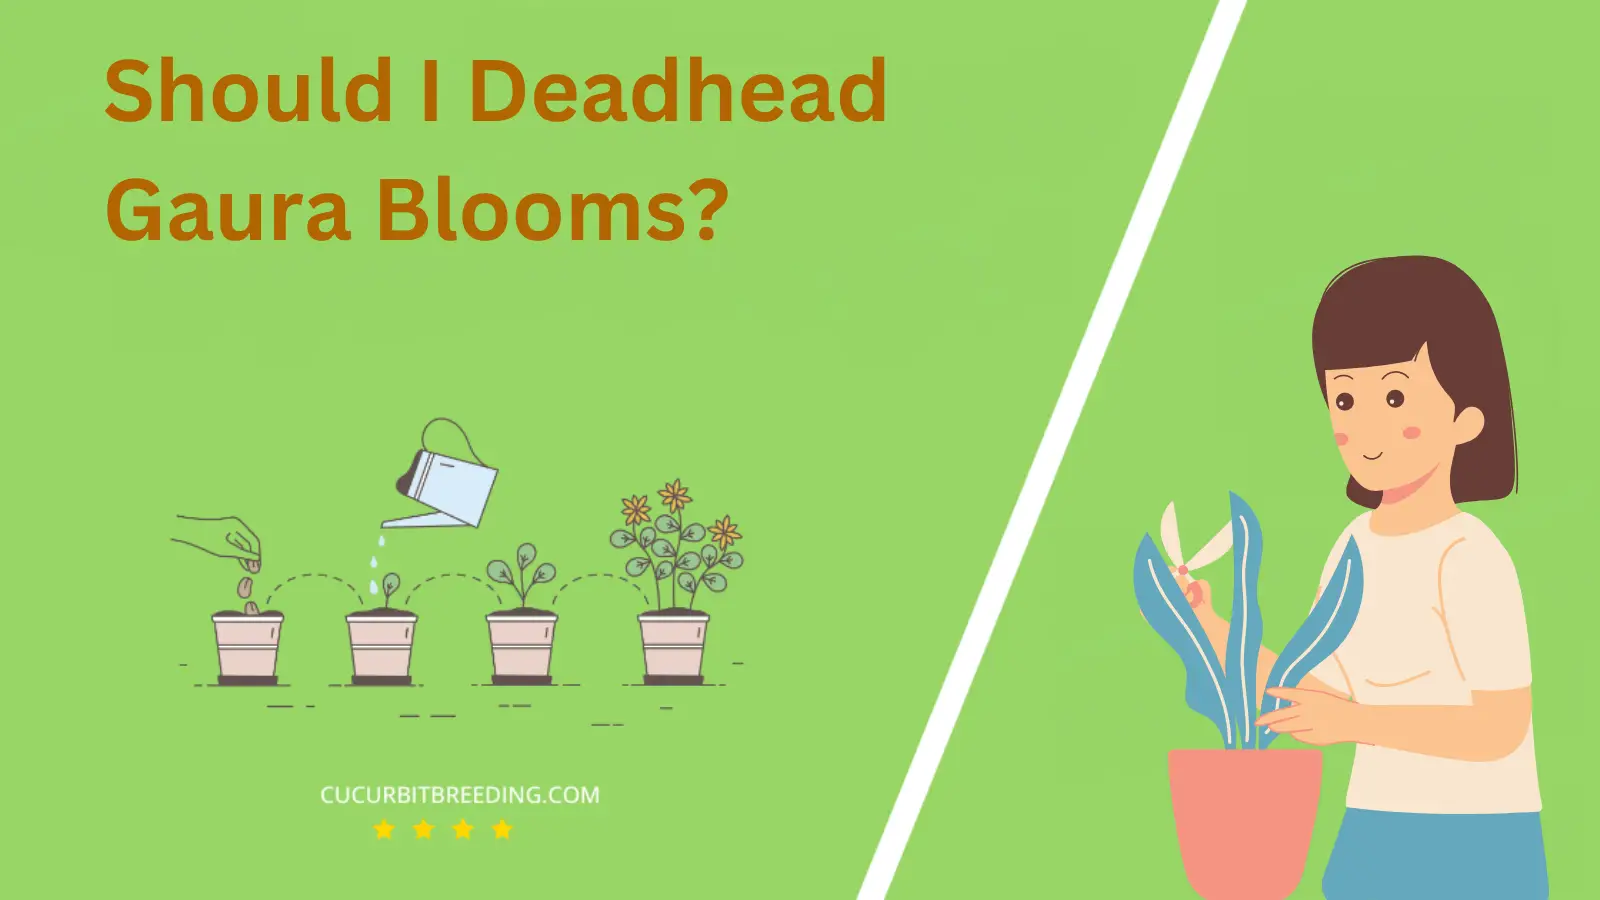 Should I Deadhead Gaura Blooms?